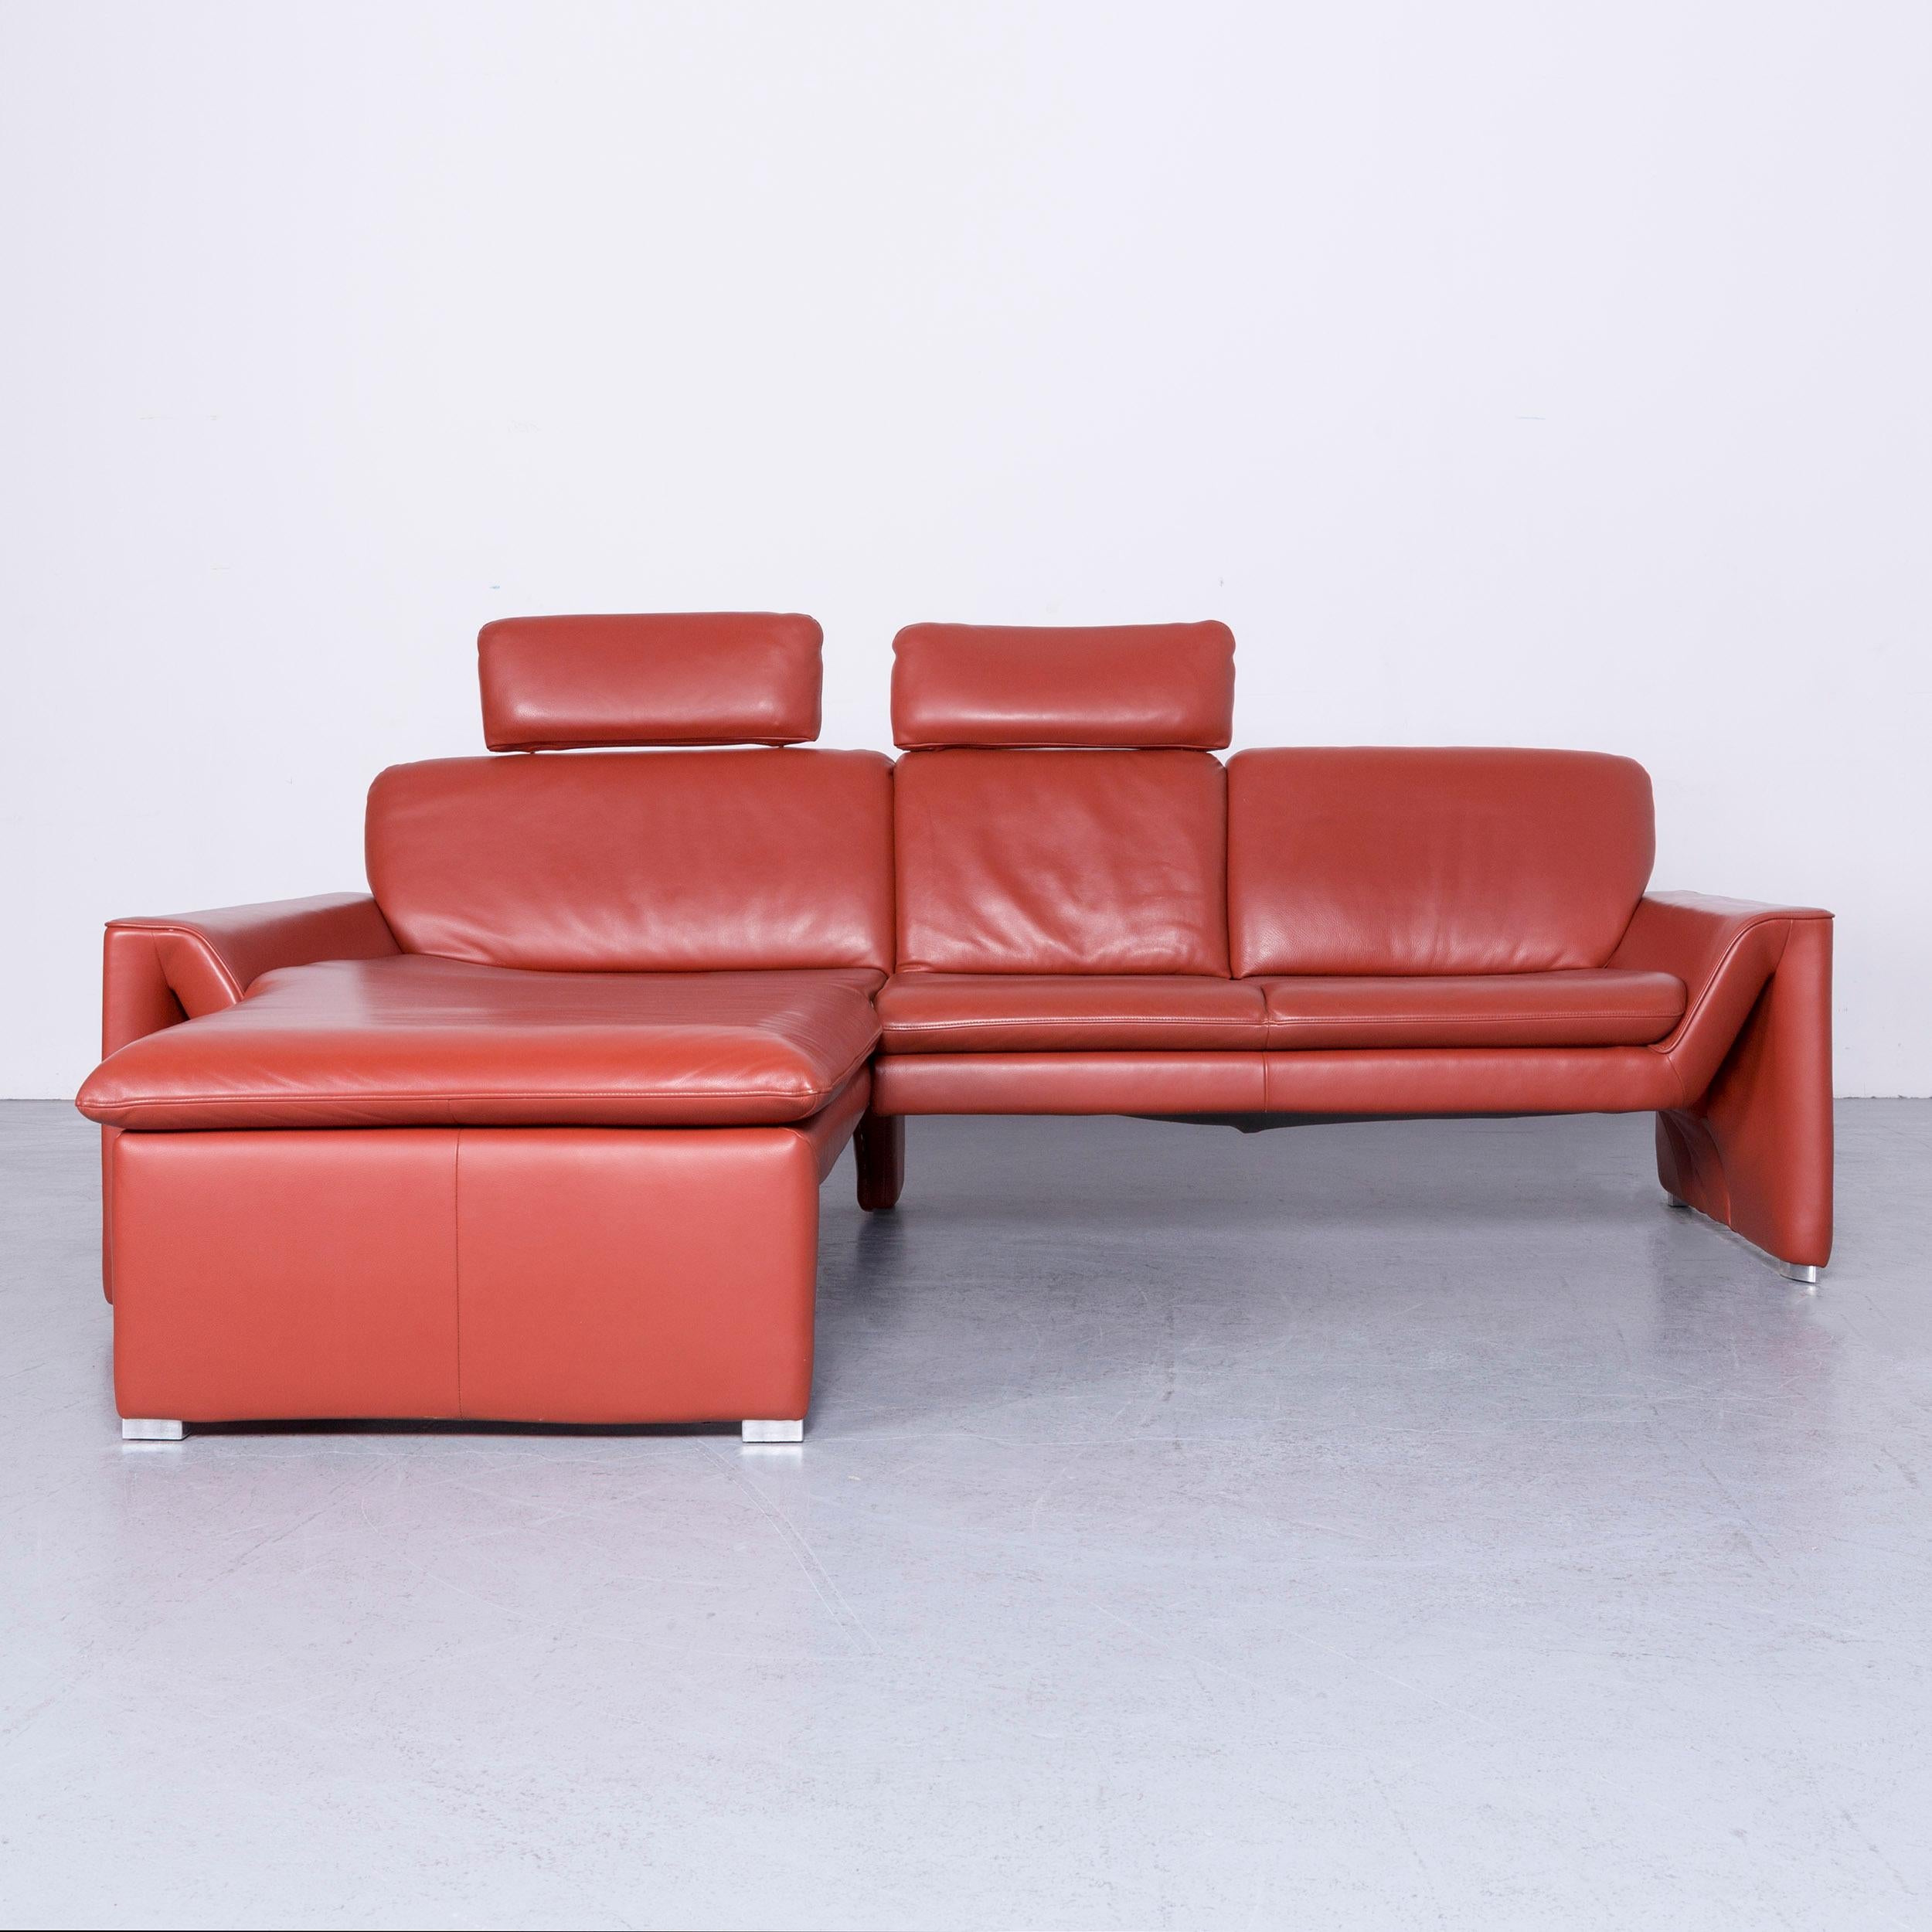 German Laauser Corvus Designer Corner Sofa Leather Red Three-Seat Couch Modern